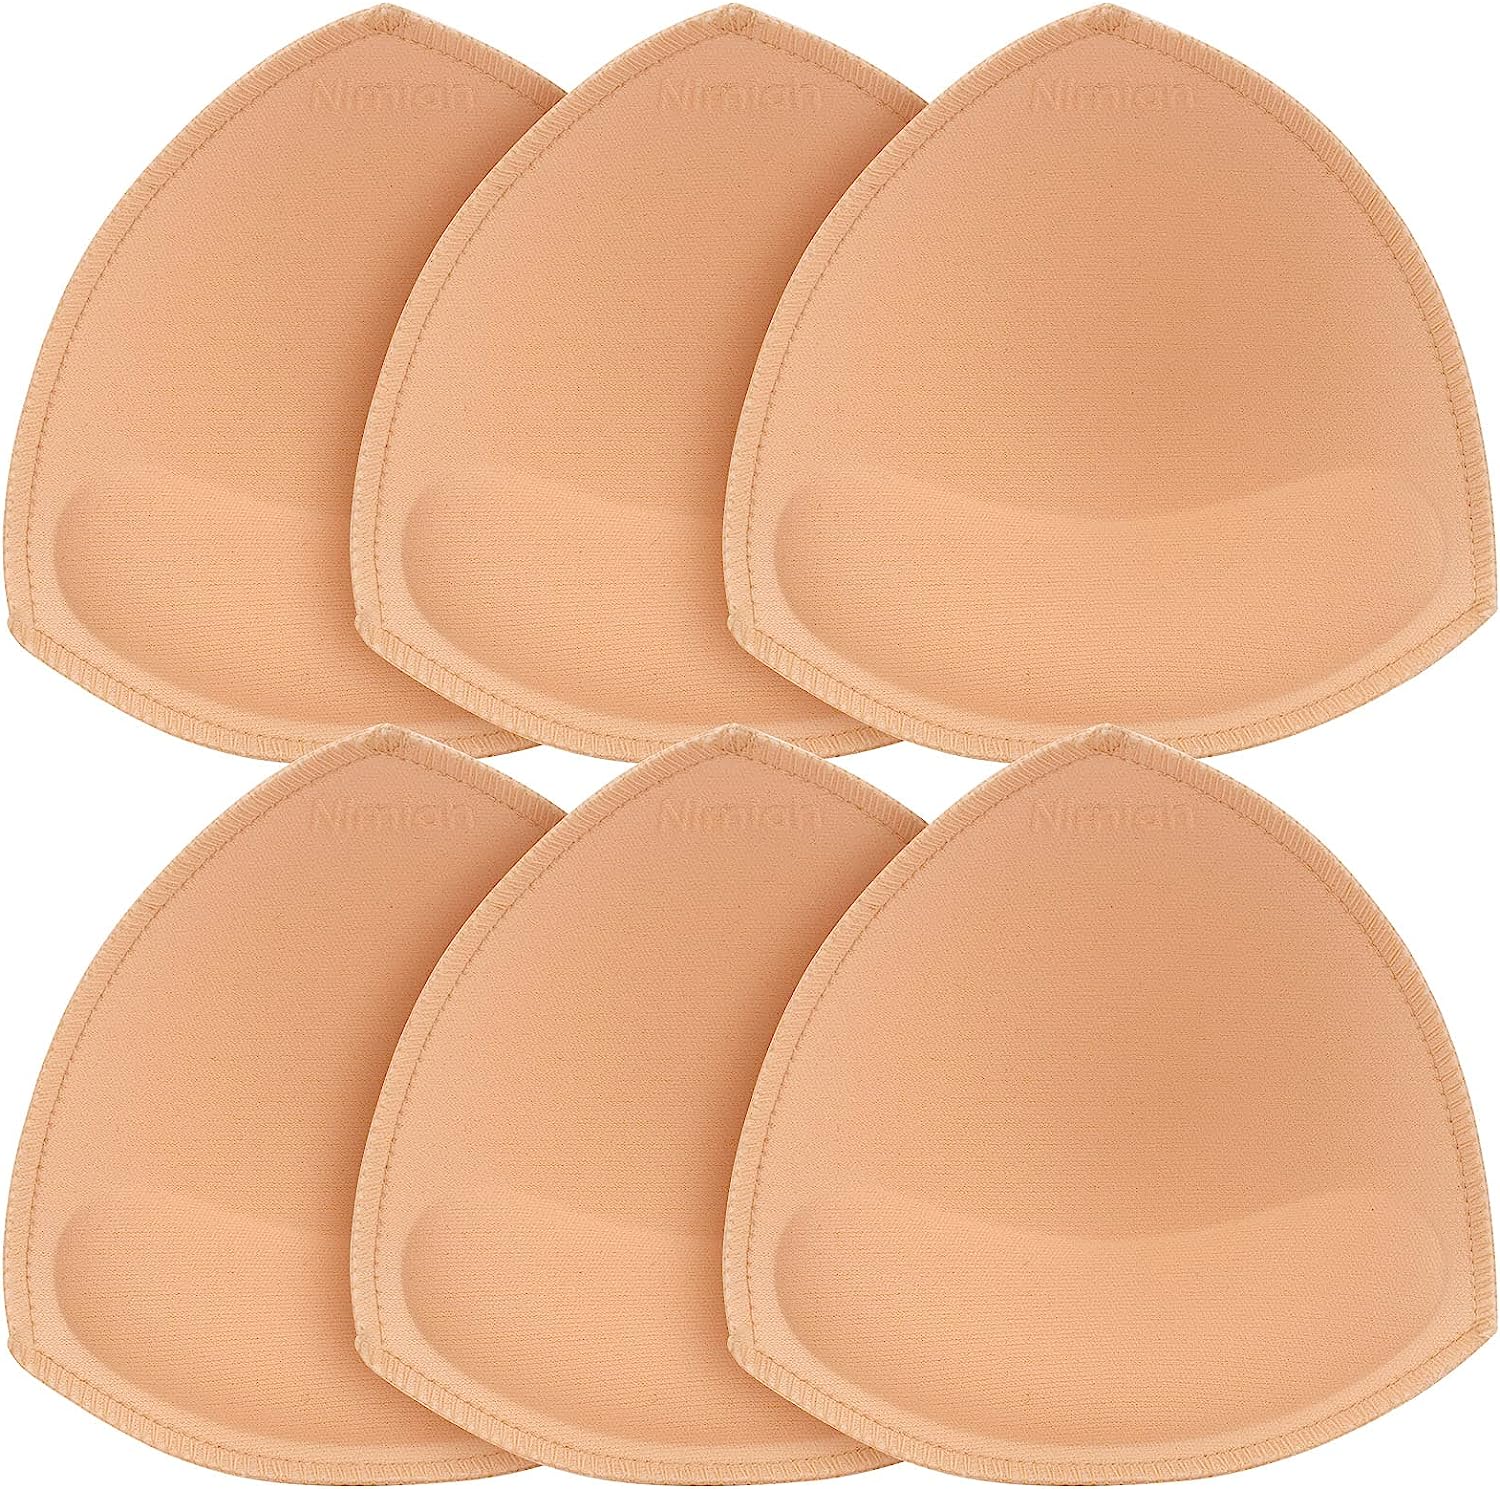  KSang Bra Pads Inserts Breast Enhancer - 4 Pairs Sew